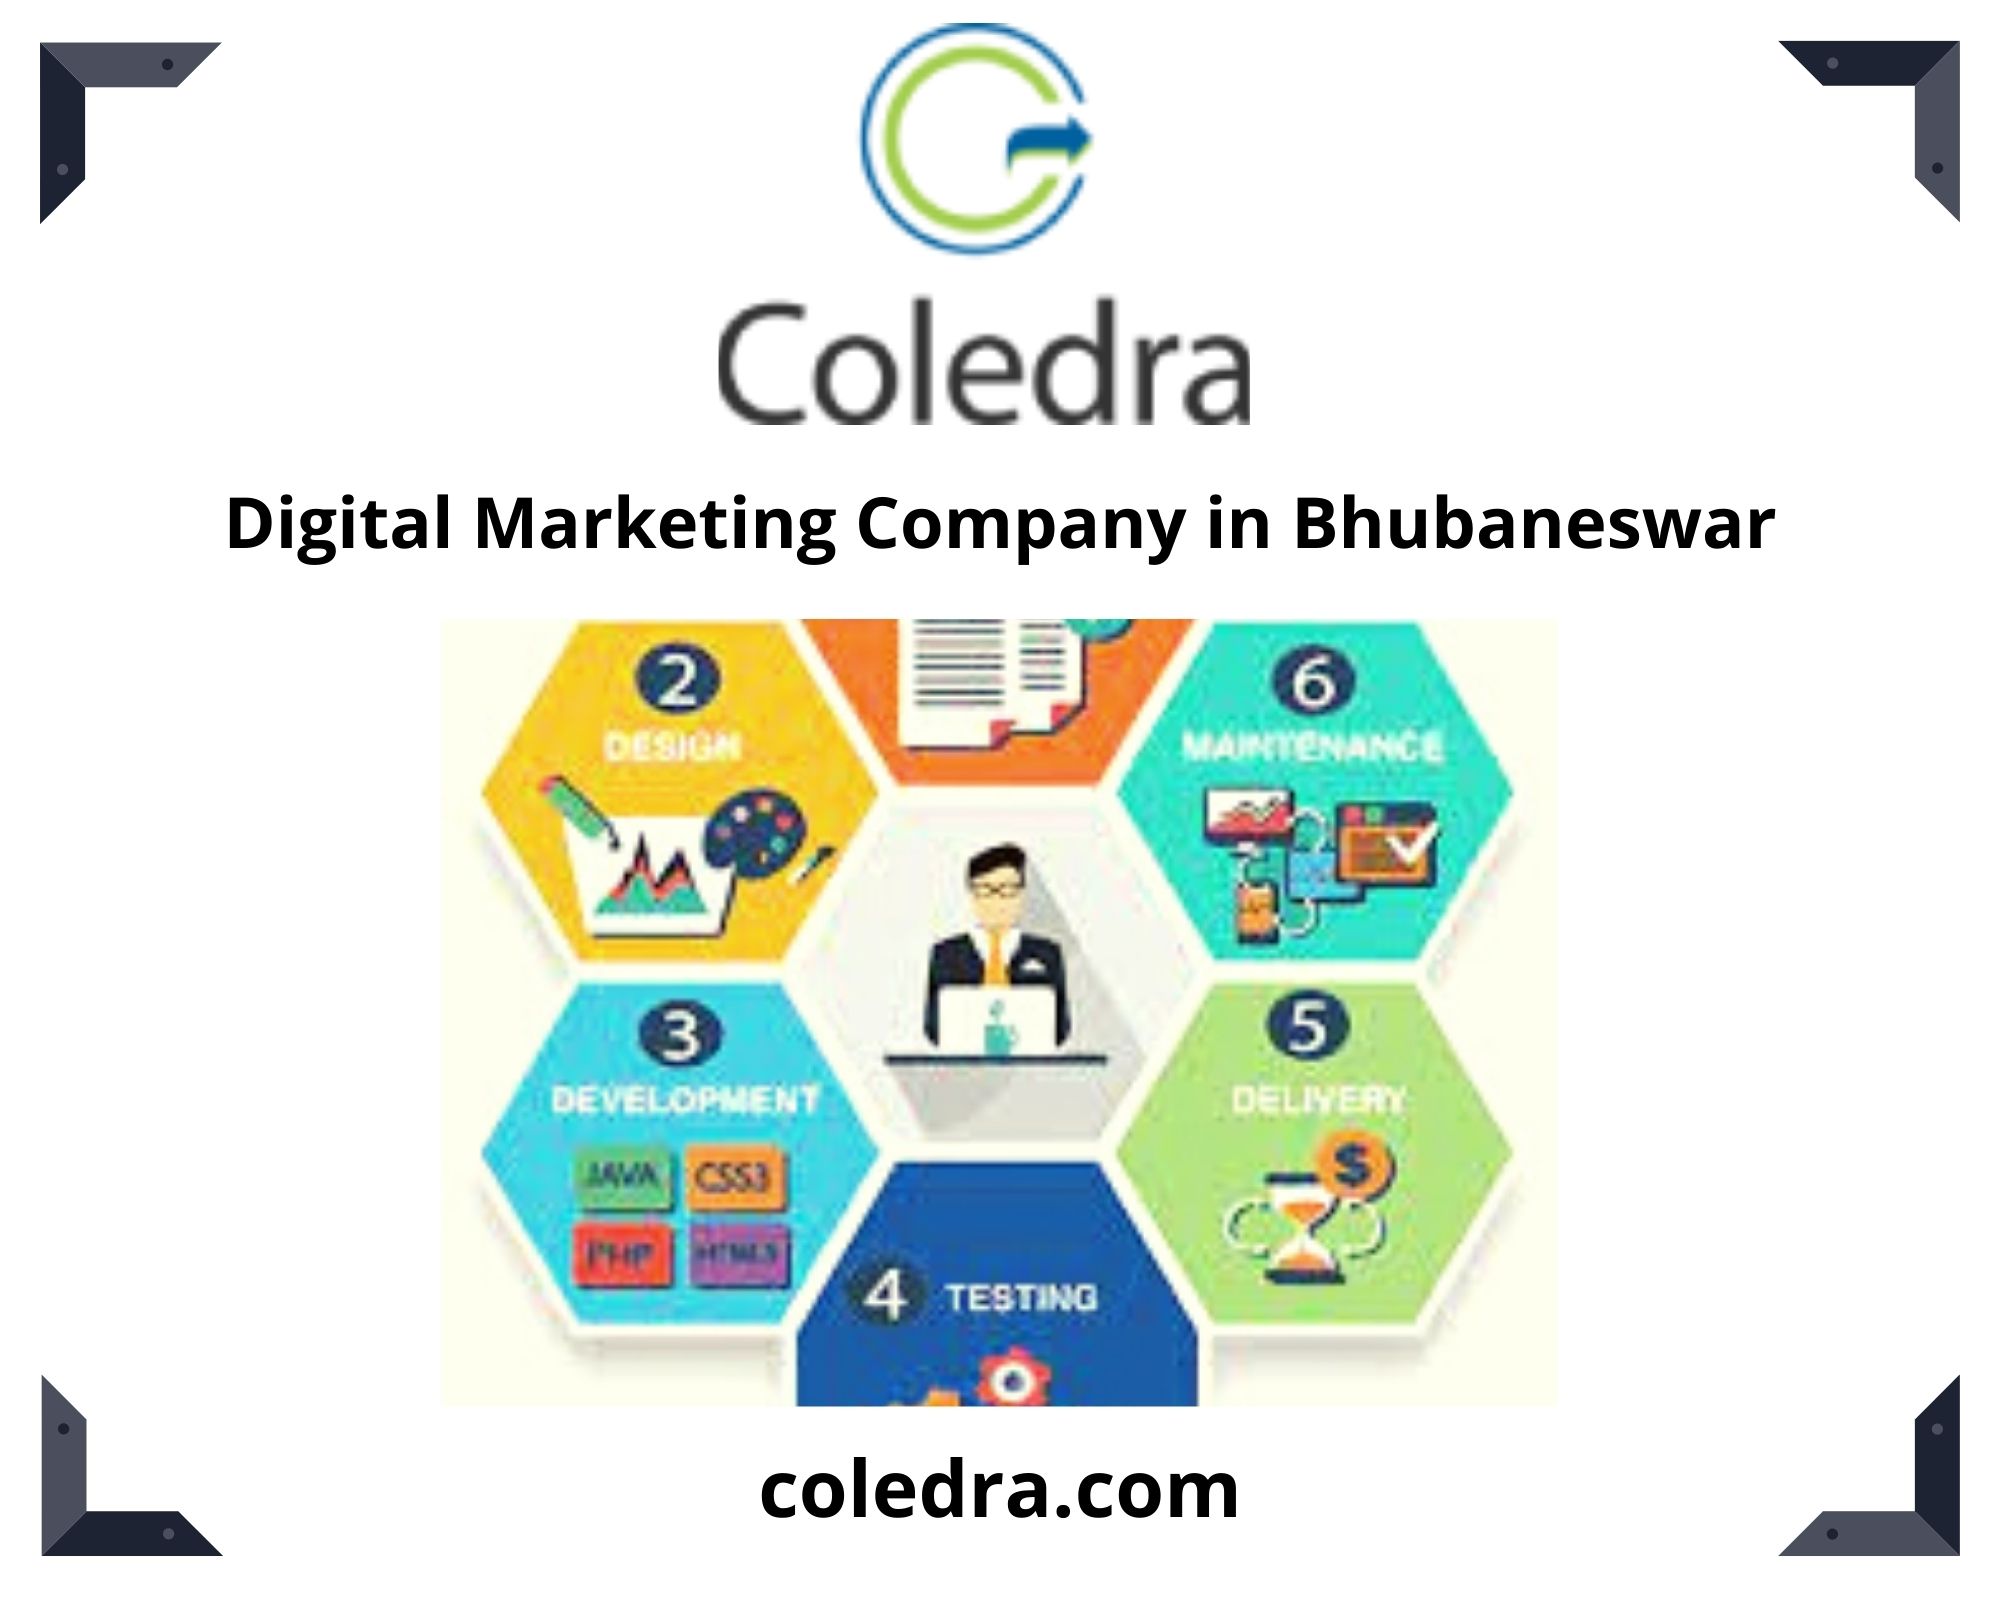 Digital Marketing Company in Bhubaneswar2.jpg  by coledrasolutions